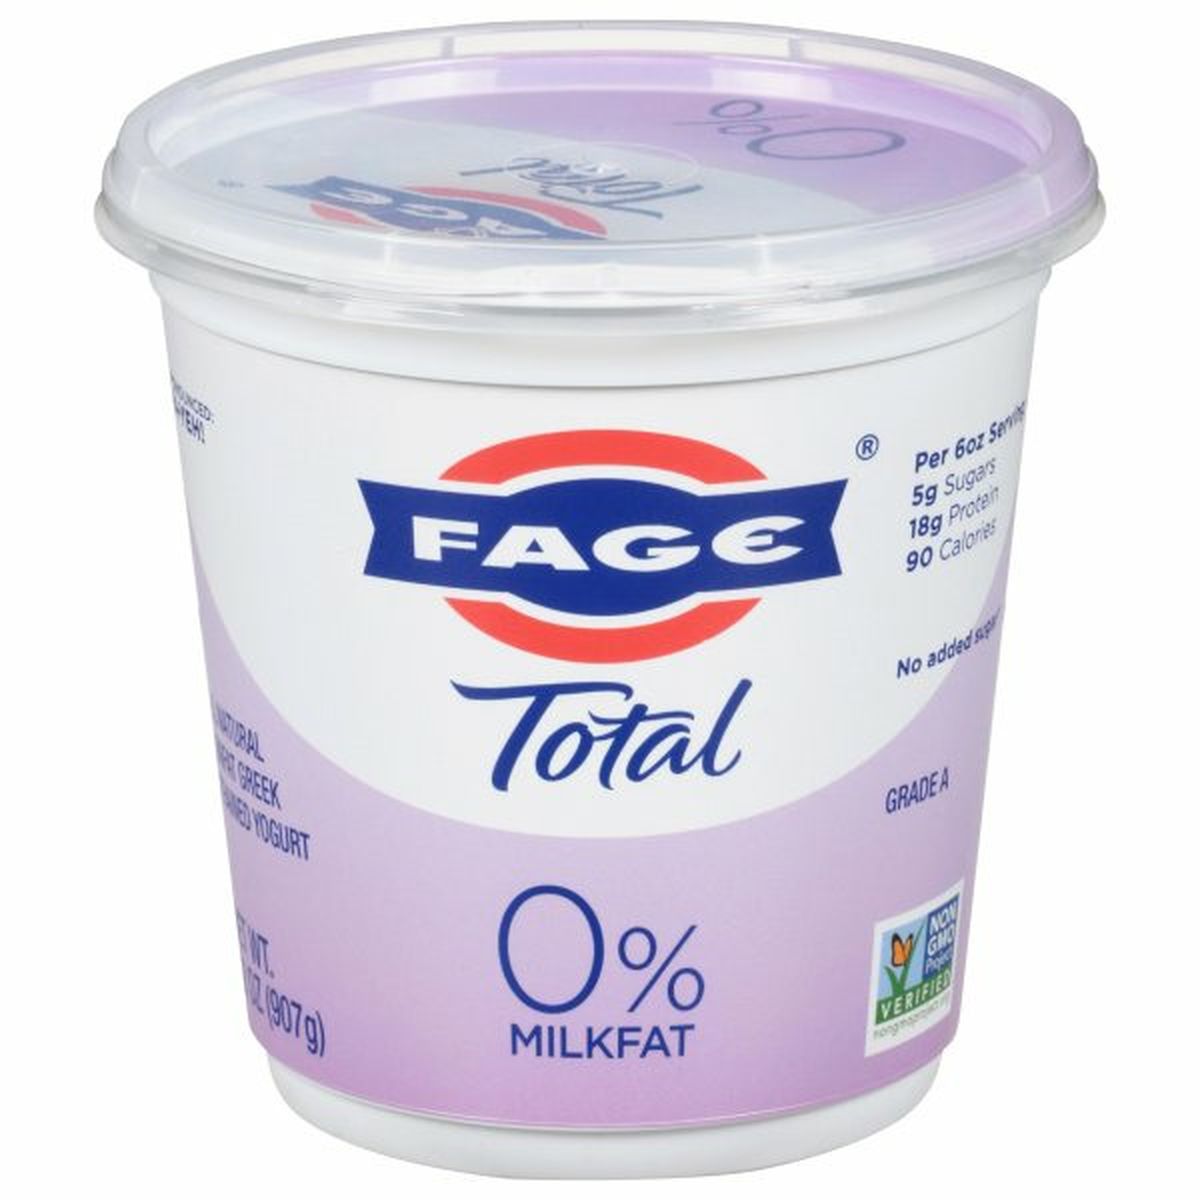 Calories in FAGE Total Yogurt, Greek, Nonfat, Strained